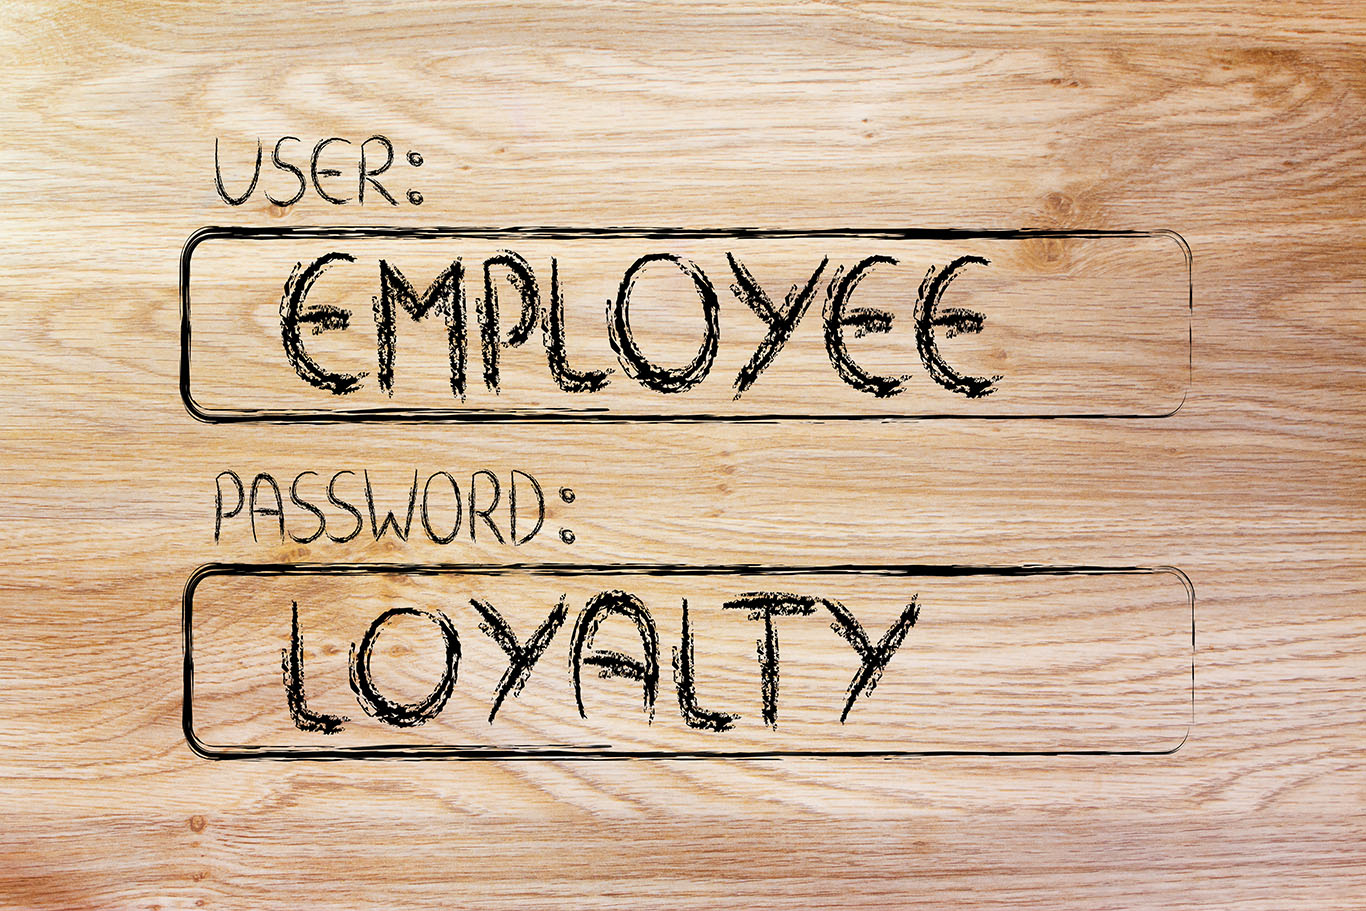 Employee’s duty of loyalty to employer